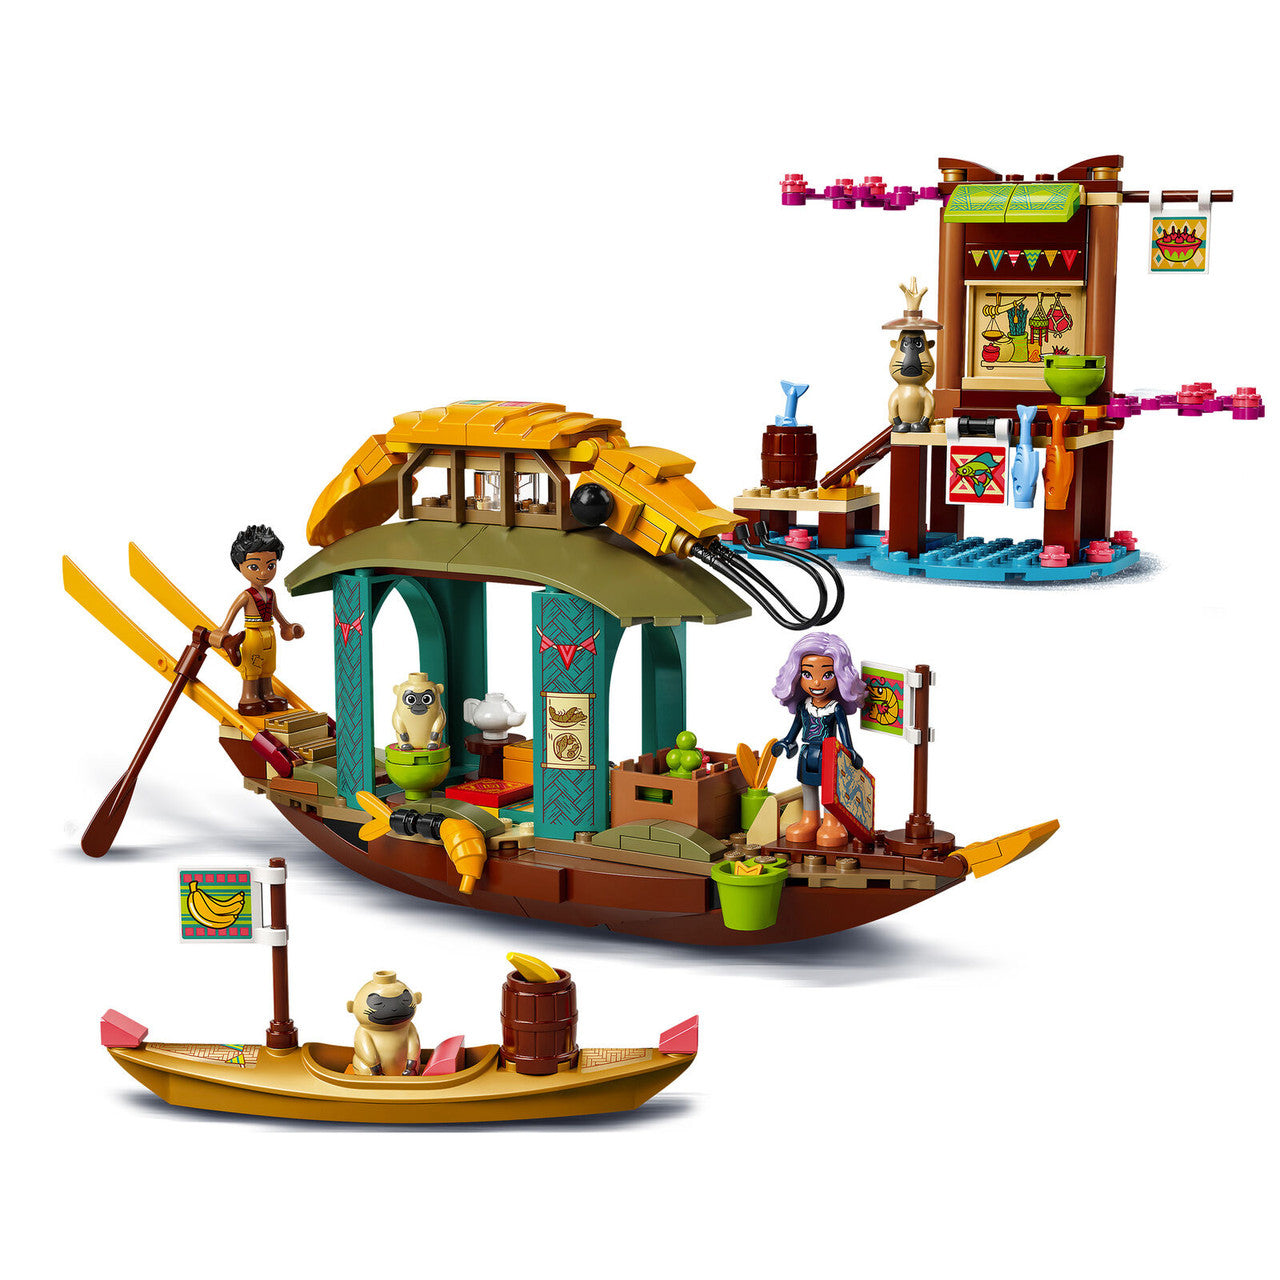 LEGO Disney Boun's Boat 43185